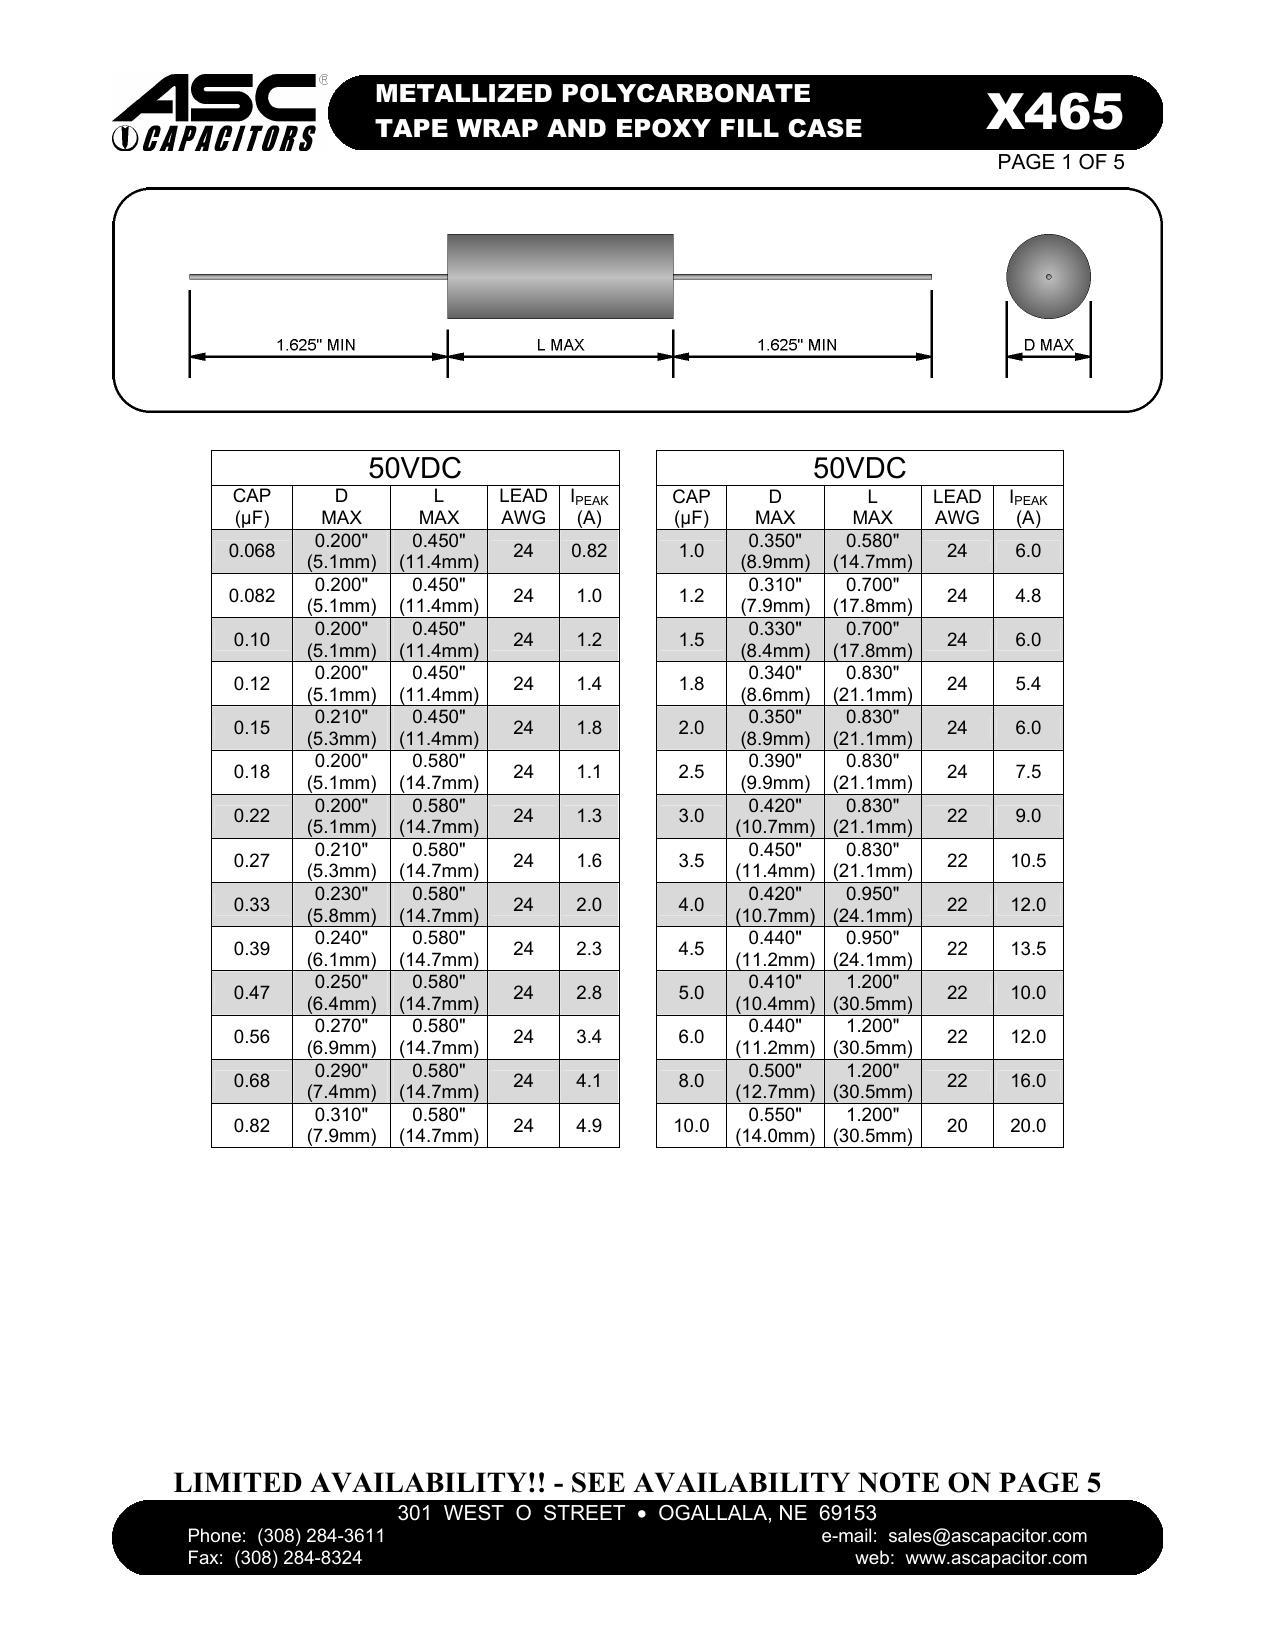 asc-metallized-polycarbonate-dc-capacitors-x465-series.pdf